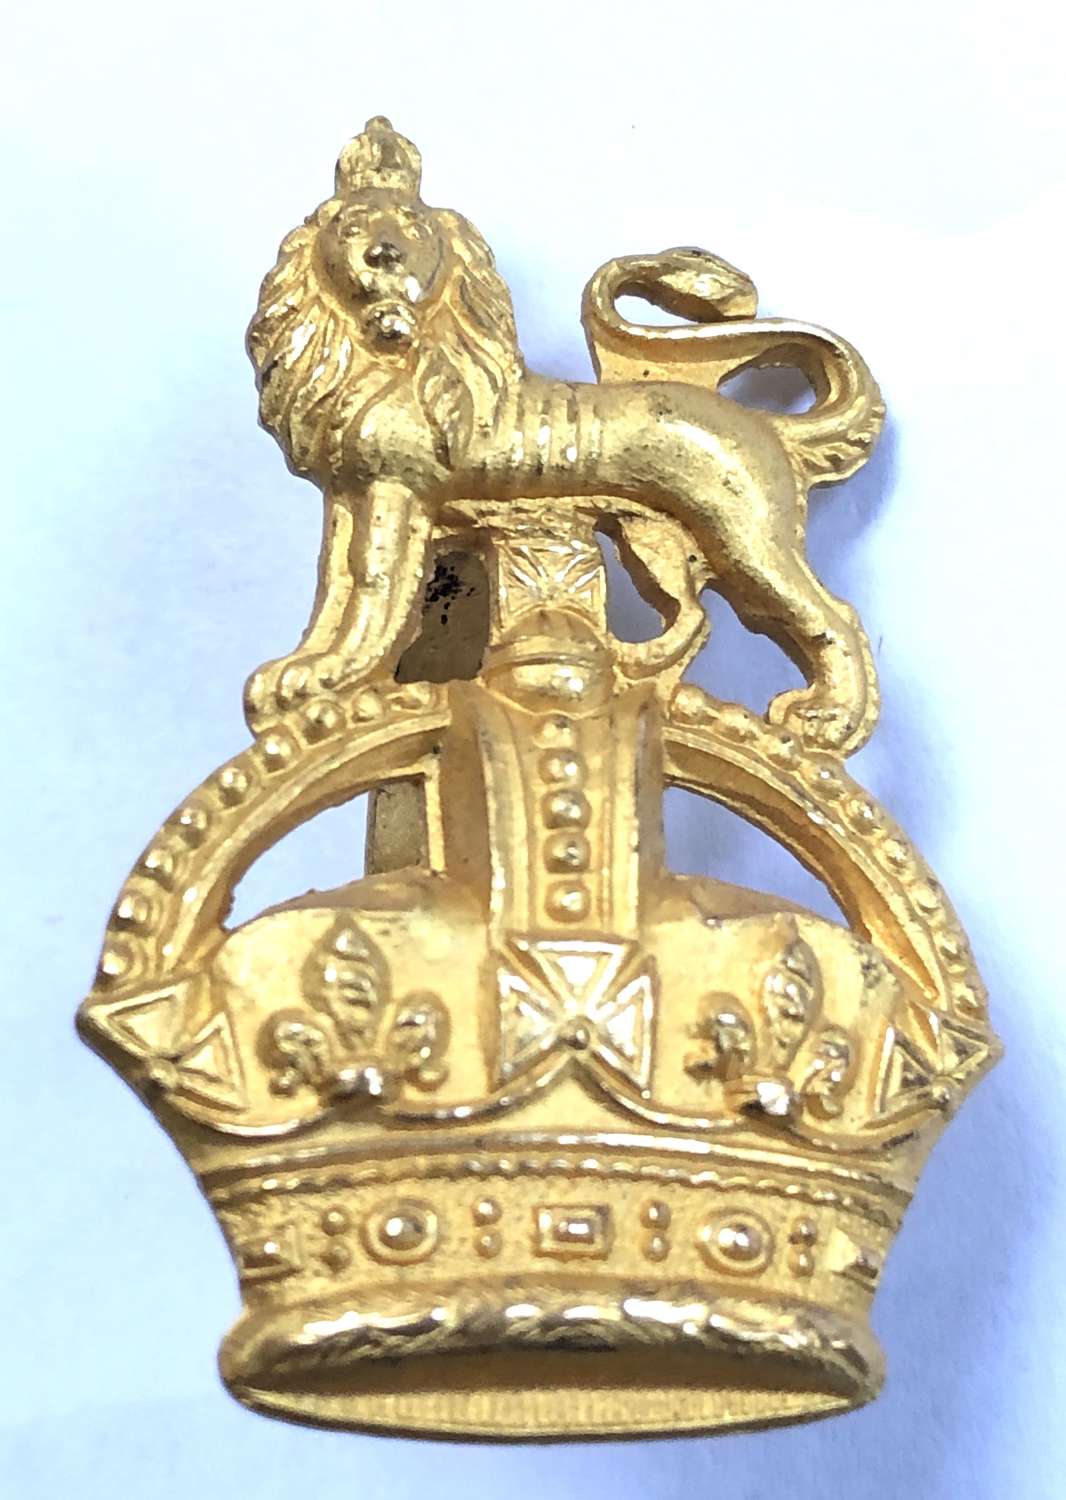 Staff Officer post 1901 gilt cap badge